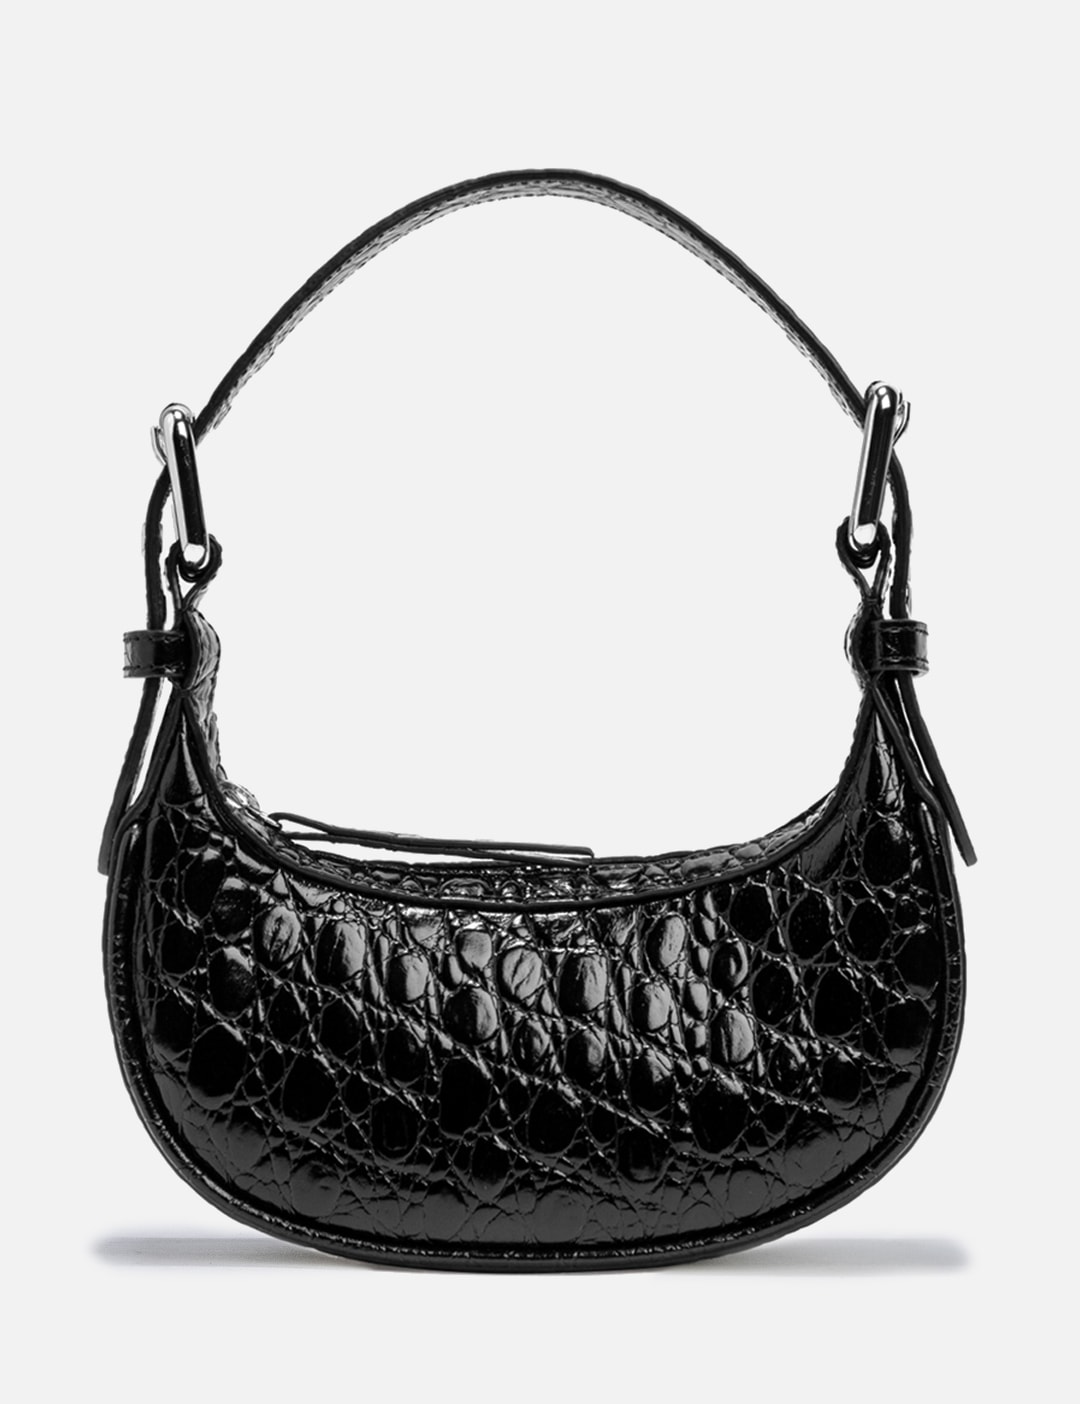 SHEIN, Bags, Black Patent Crocodile Style Handbag